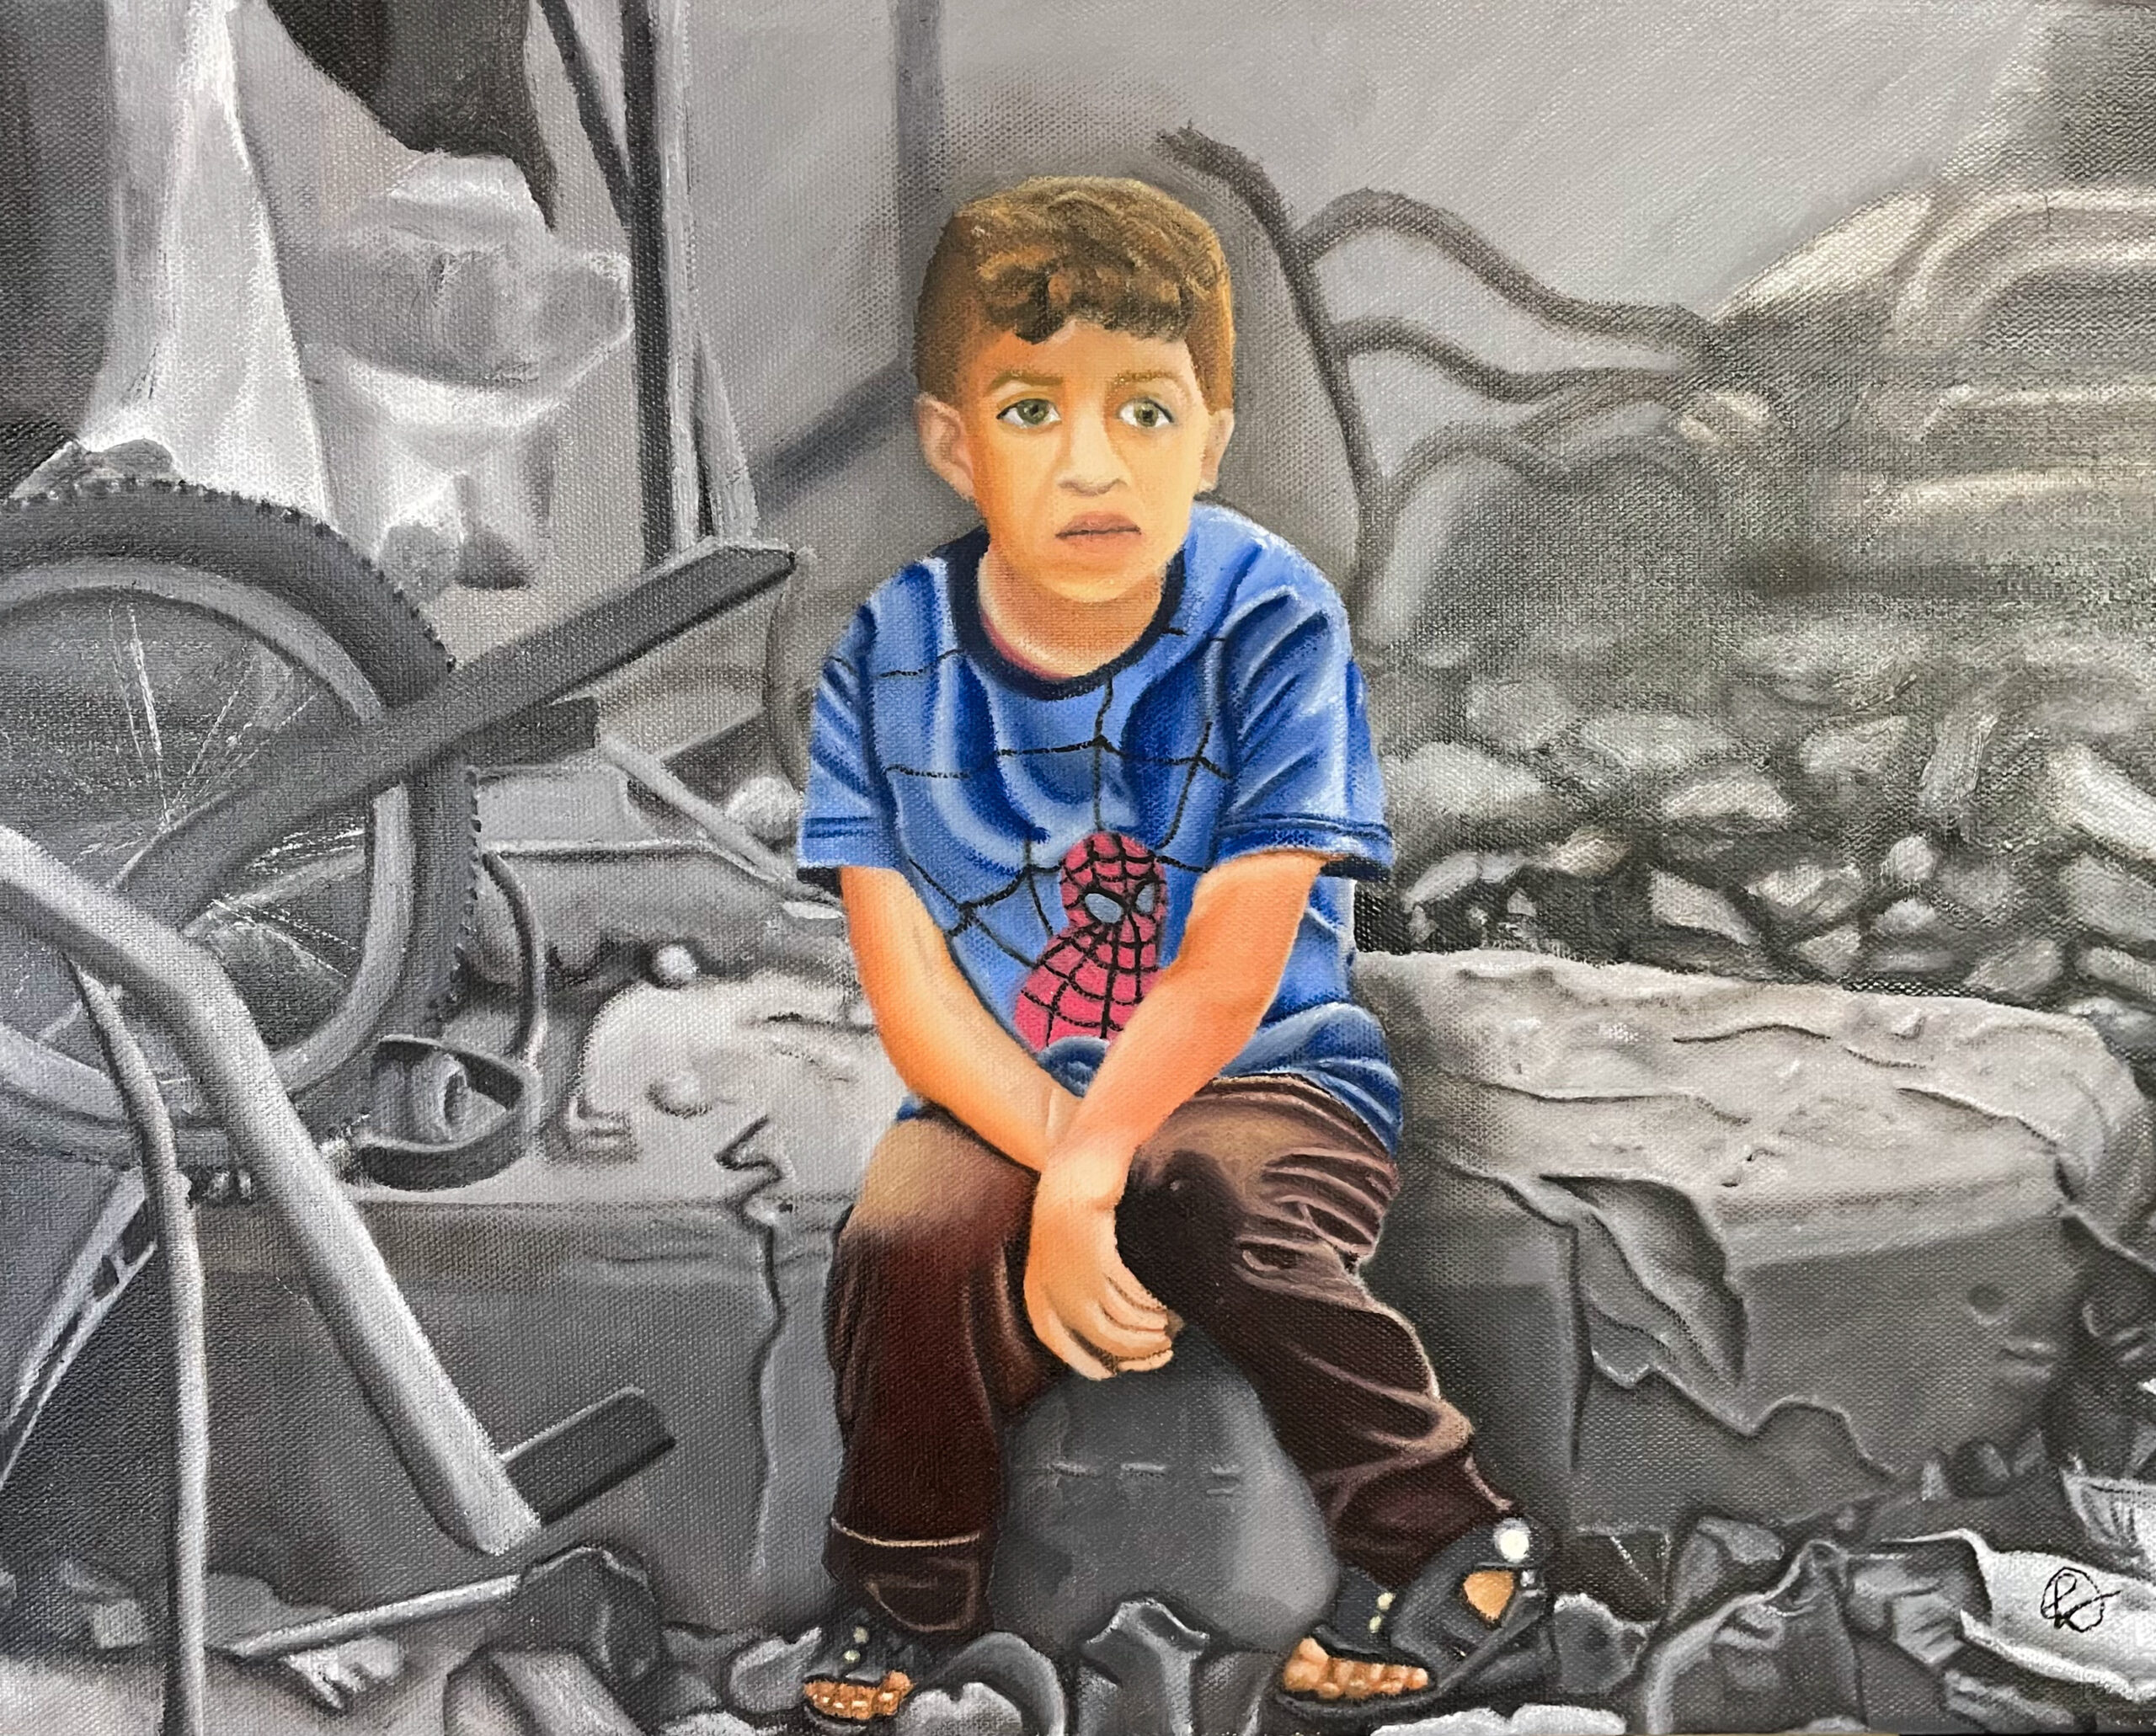 O menino palestino sentado sobre os escombros. Óleo sobre tela. The palestinian kid sitting on the debris. Oil on canvas.